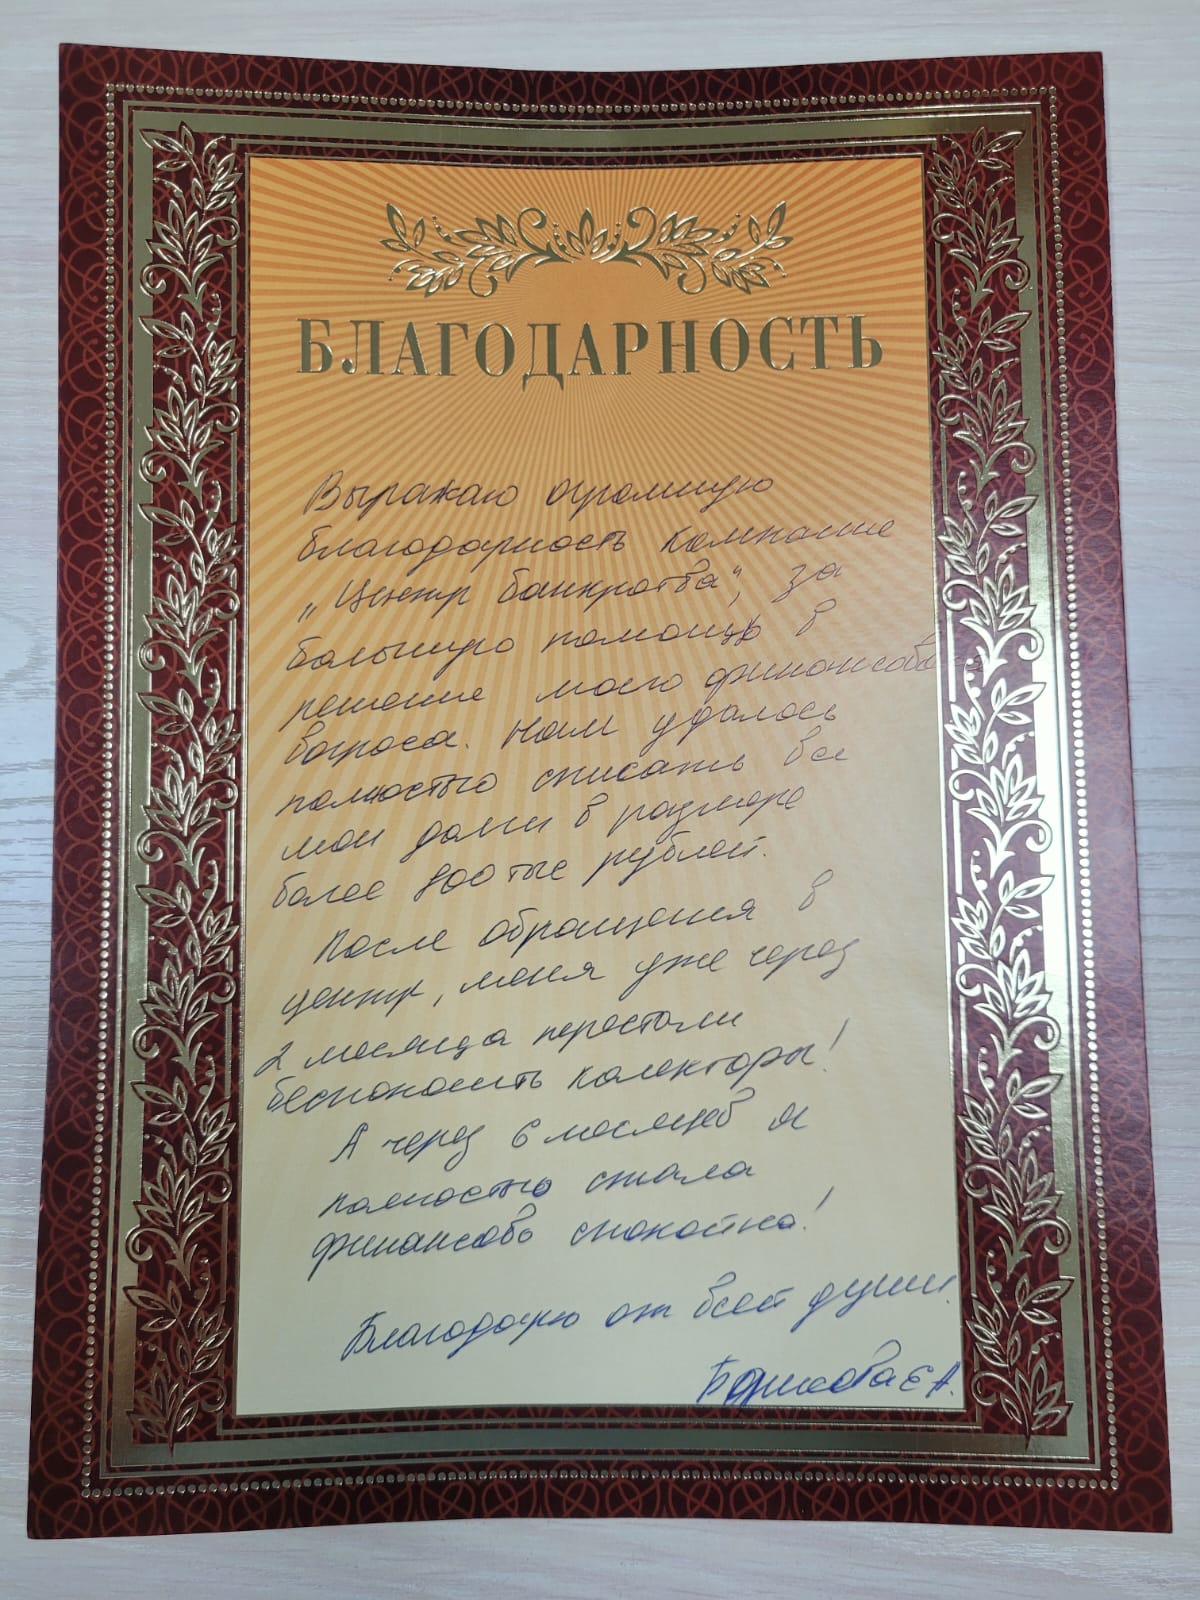 Благодарность от Борисова Евгения Александровна